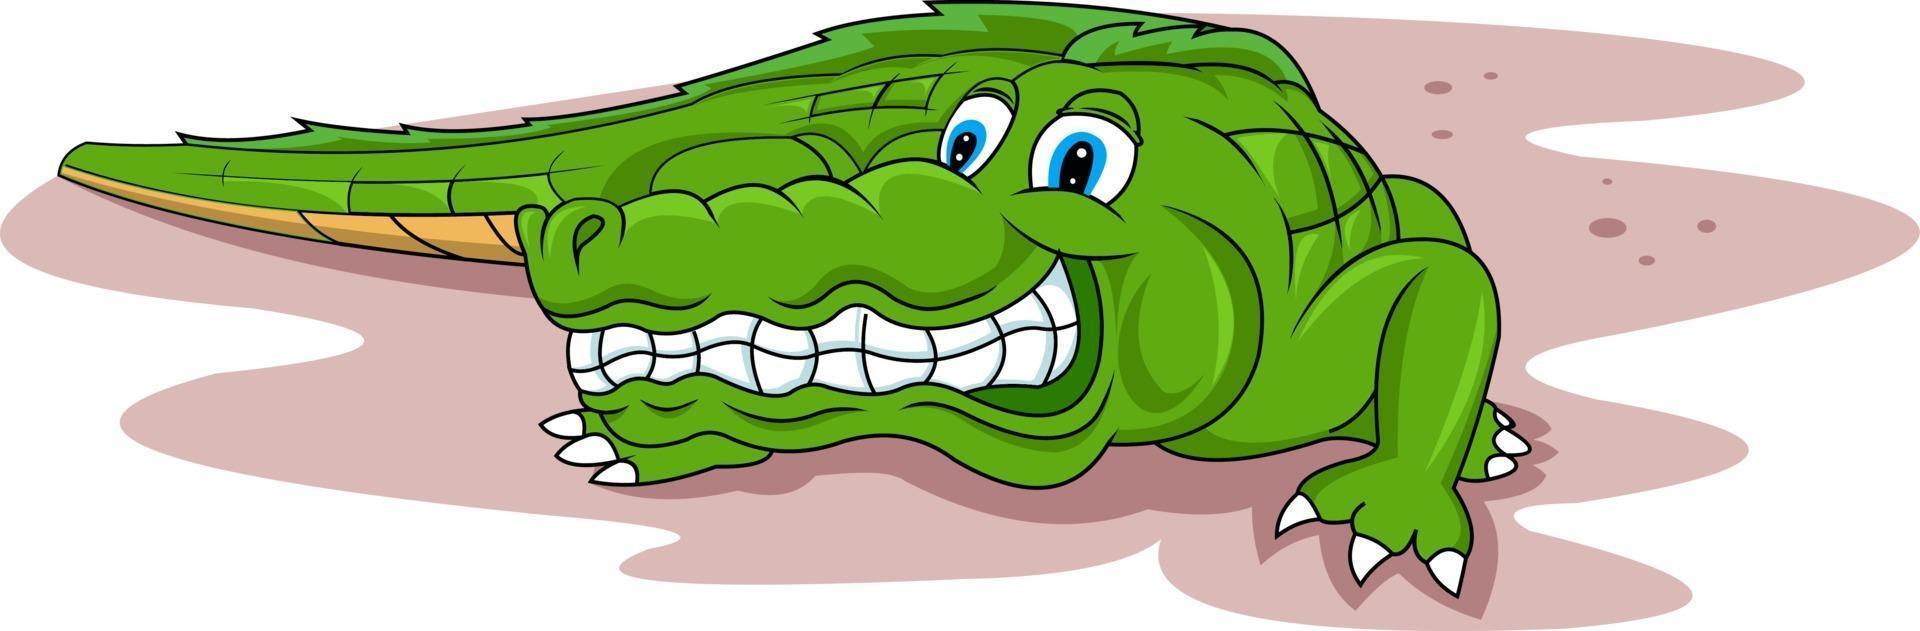 grappige cartoon krokodil vector